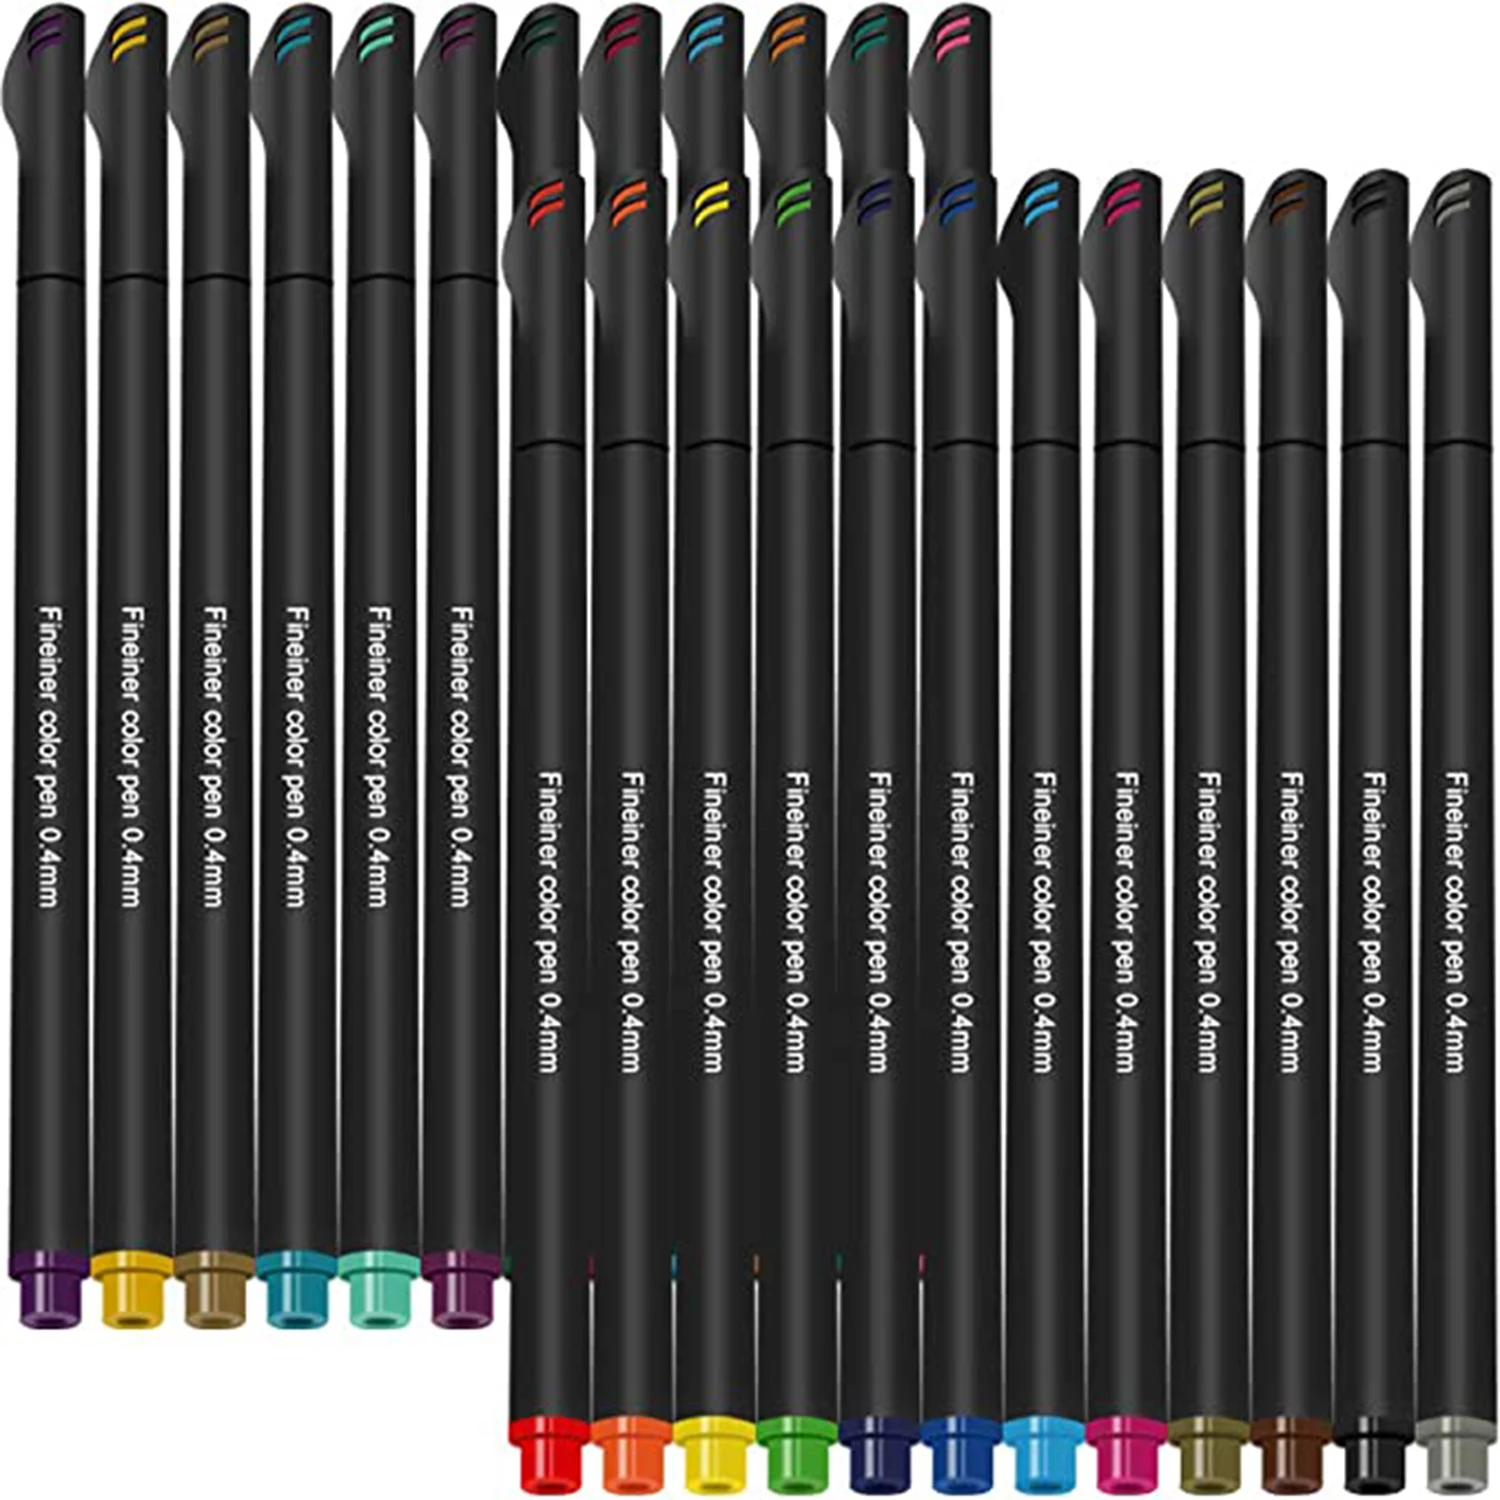 https://ae01.alicdn.com/kf/S8383c03dafcb40cfa5706460a6af20a77/24-Color-Set-0-4mm-Micro-Tip-Fineliner-Pen-Drawing-Painting-Sketch-Markers-Set-Fine-Line.jpg